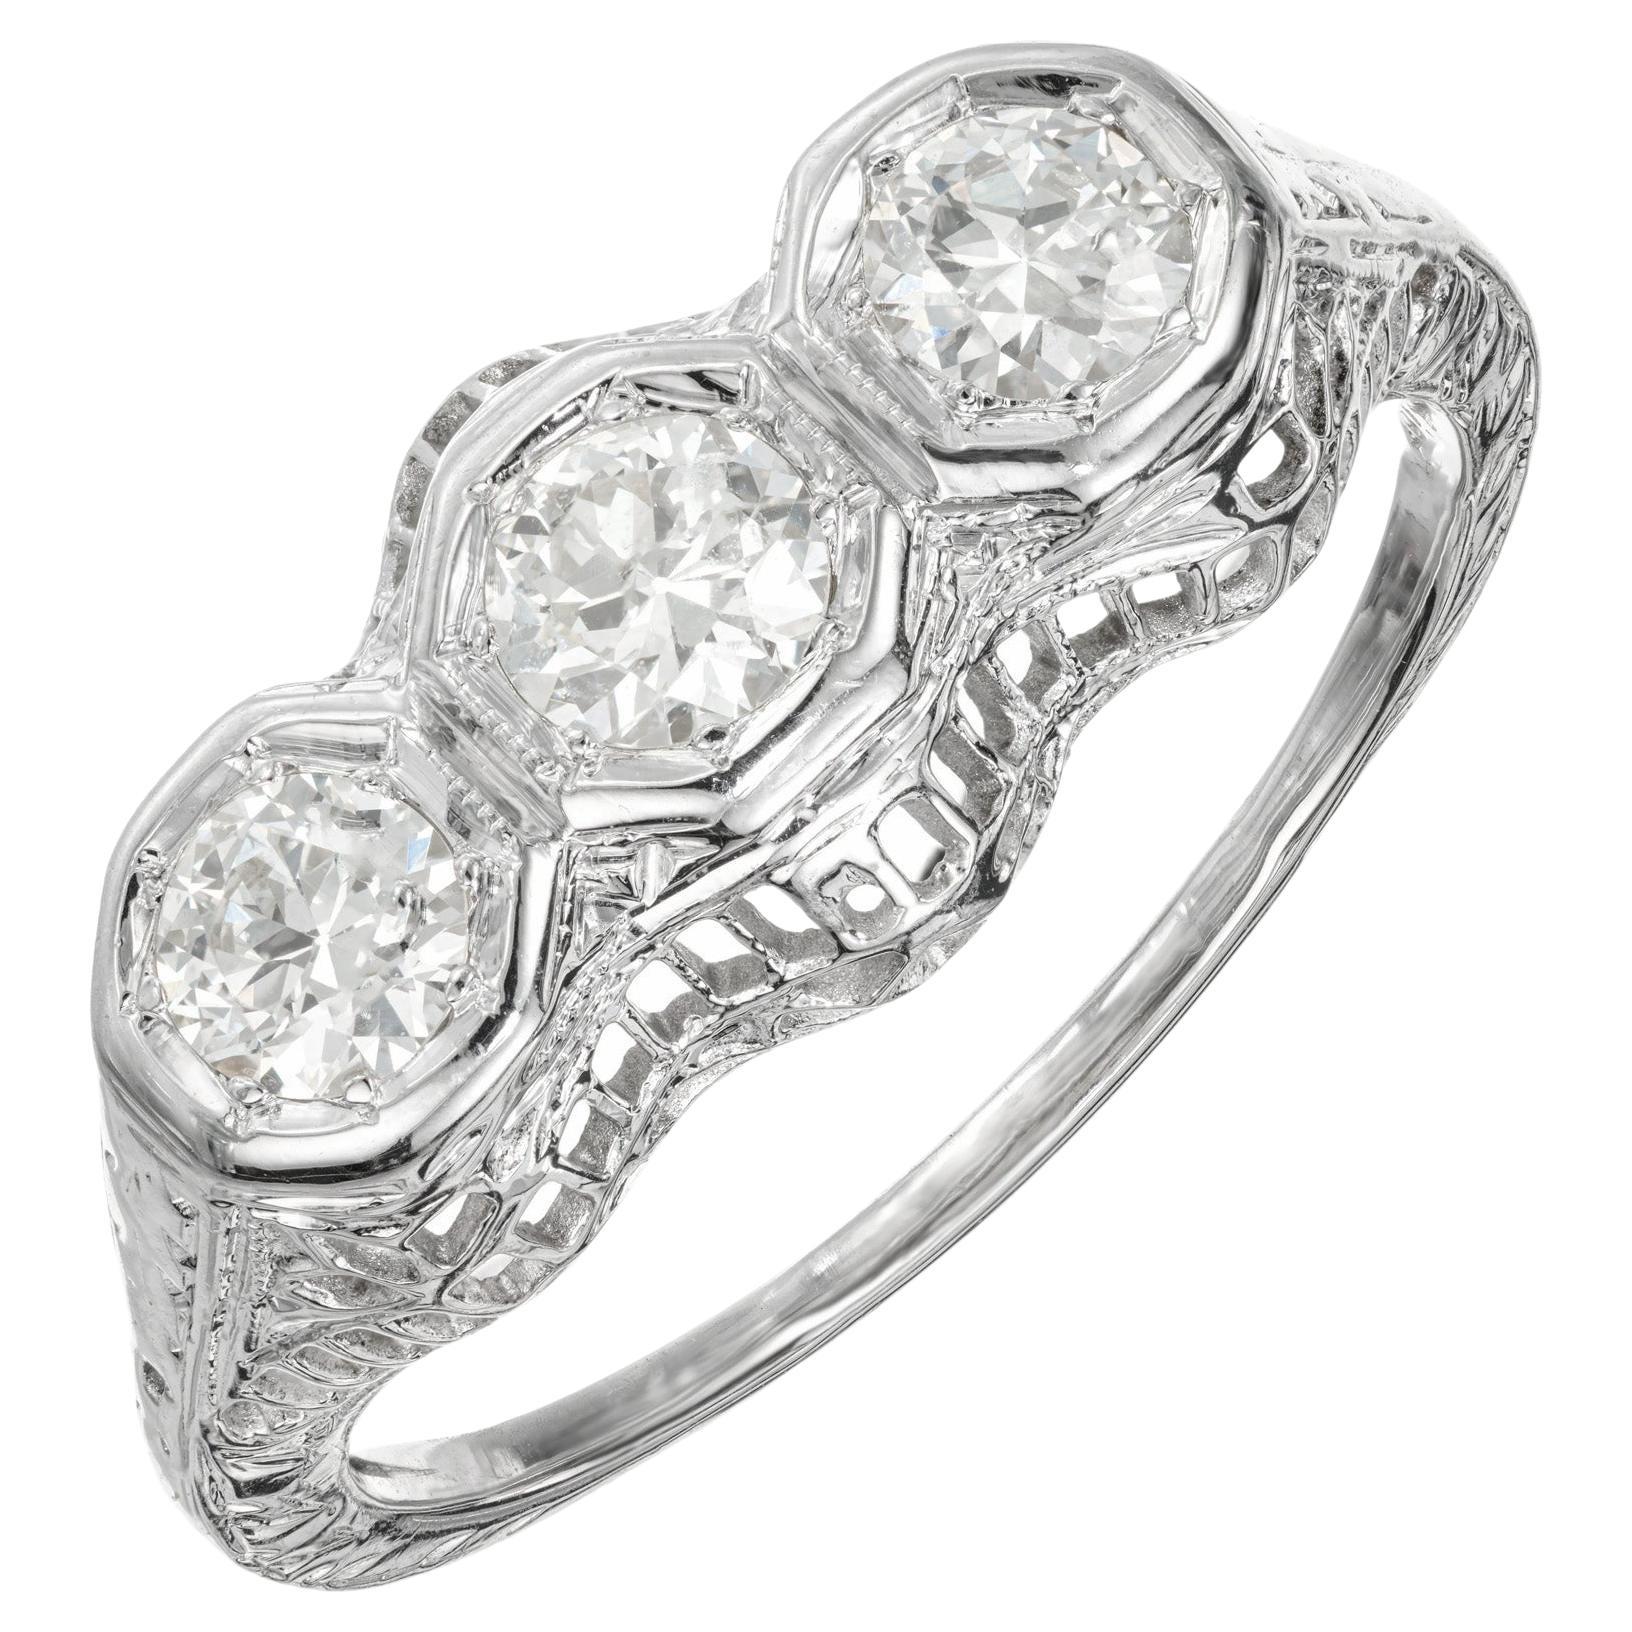  .60 Carat Diamond White Gold Three Stone Ring